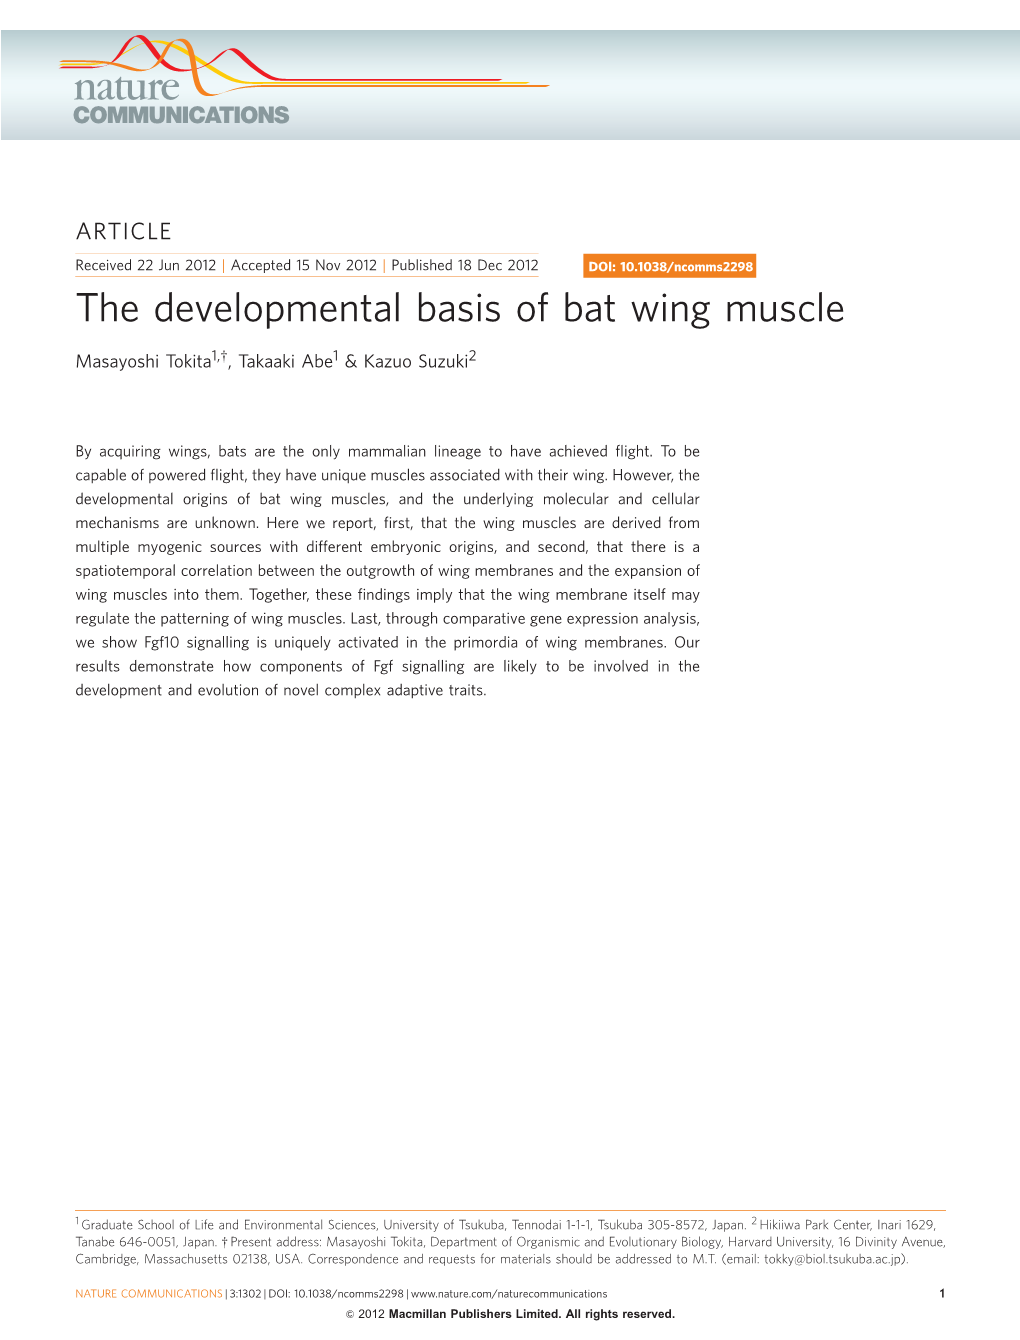 The Developmental Basis of Bat Wing Muscle